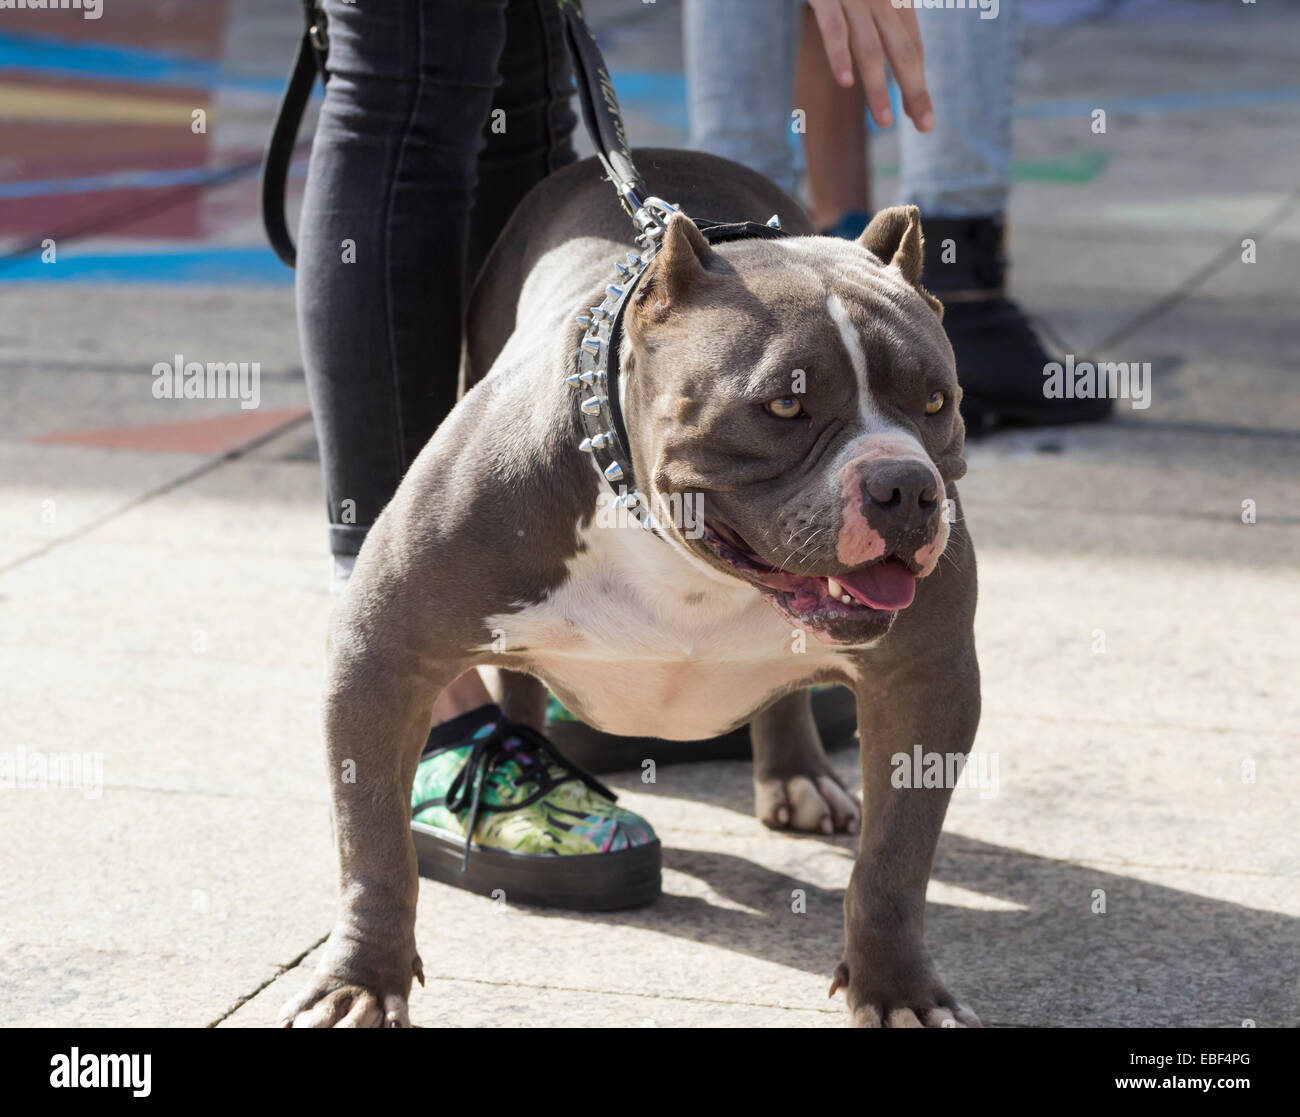 American Bully breed dog Stock Photo - Alamy